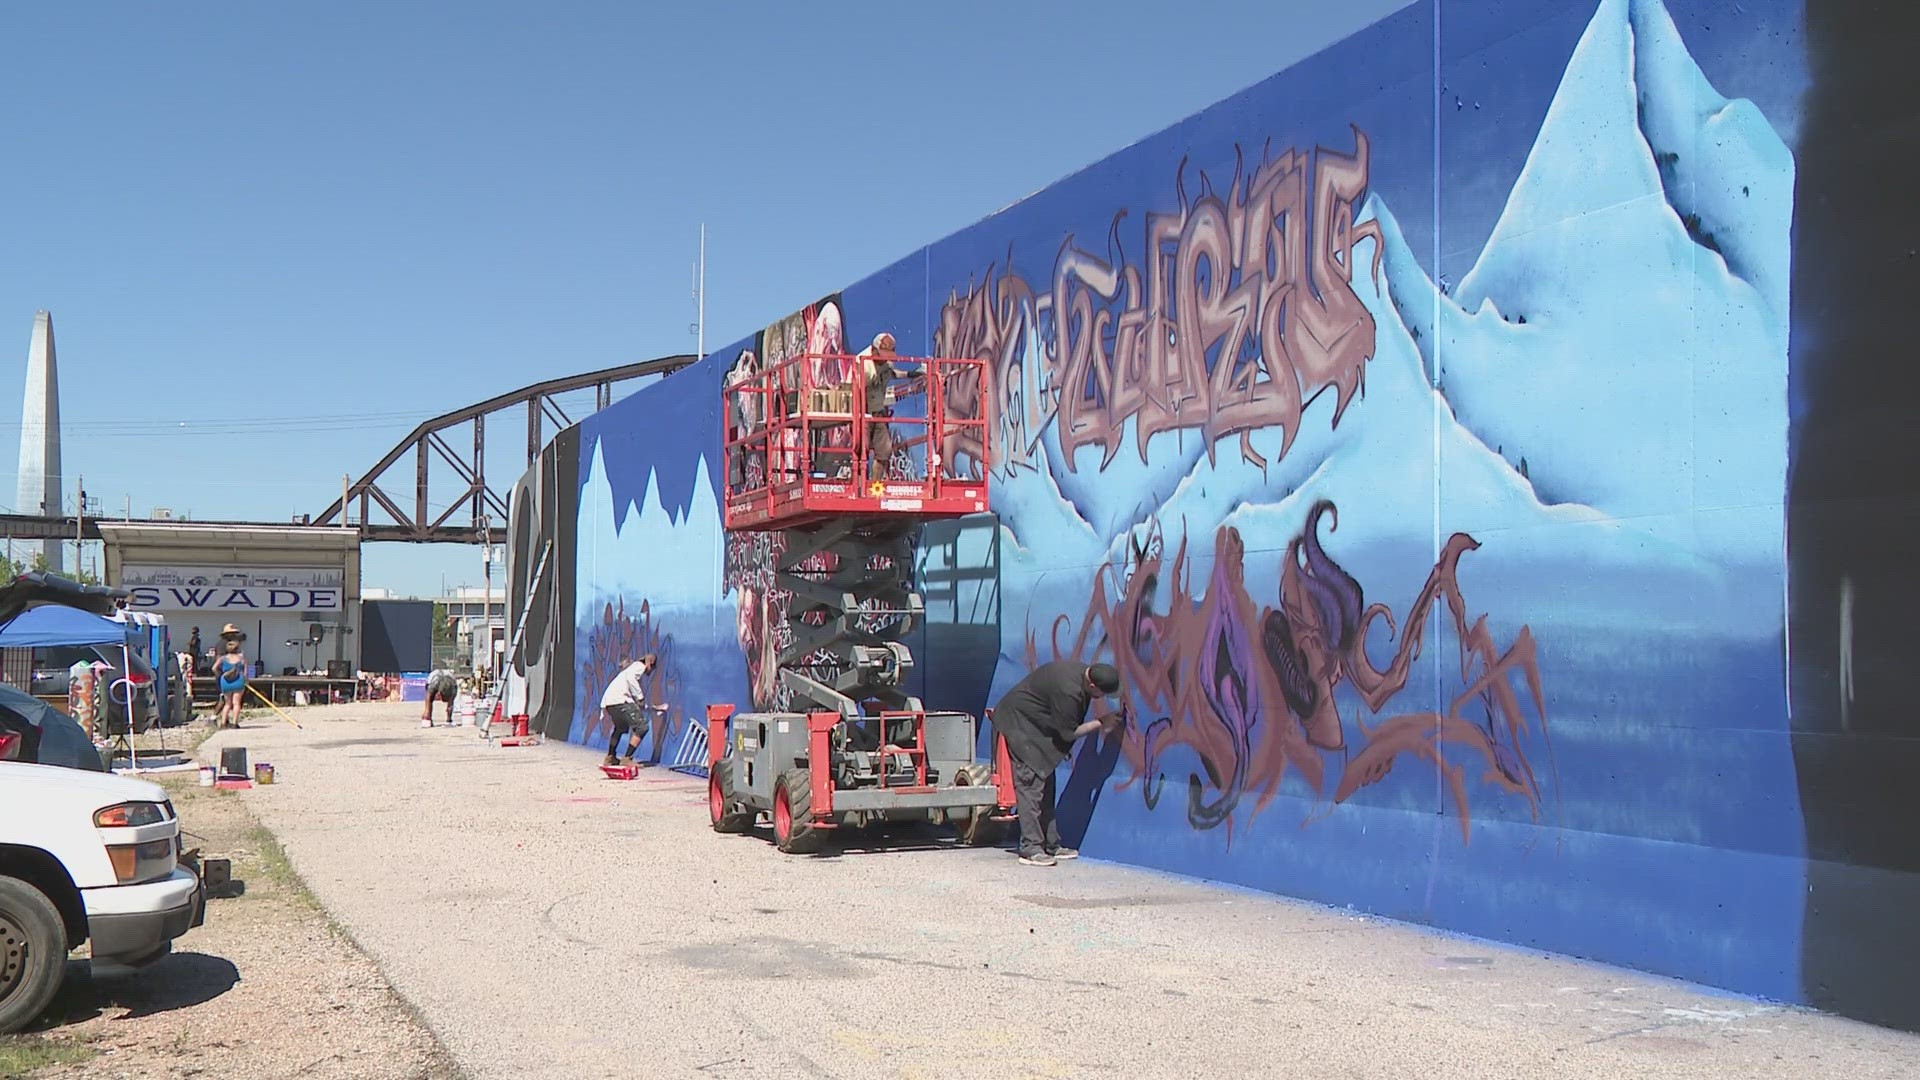 Paint Louis celebrates 26 years as St. Louis graffiti, music fest